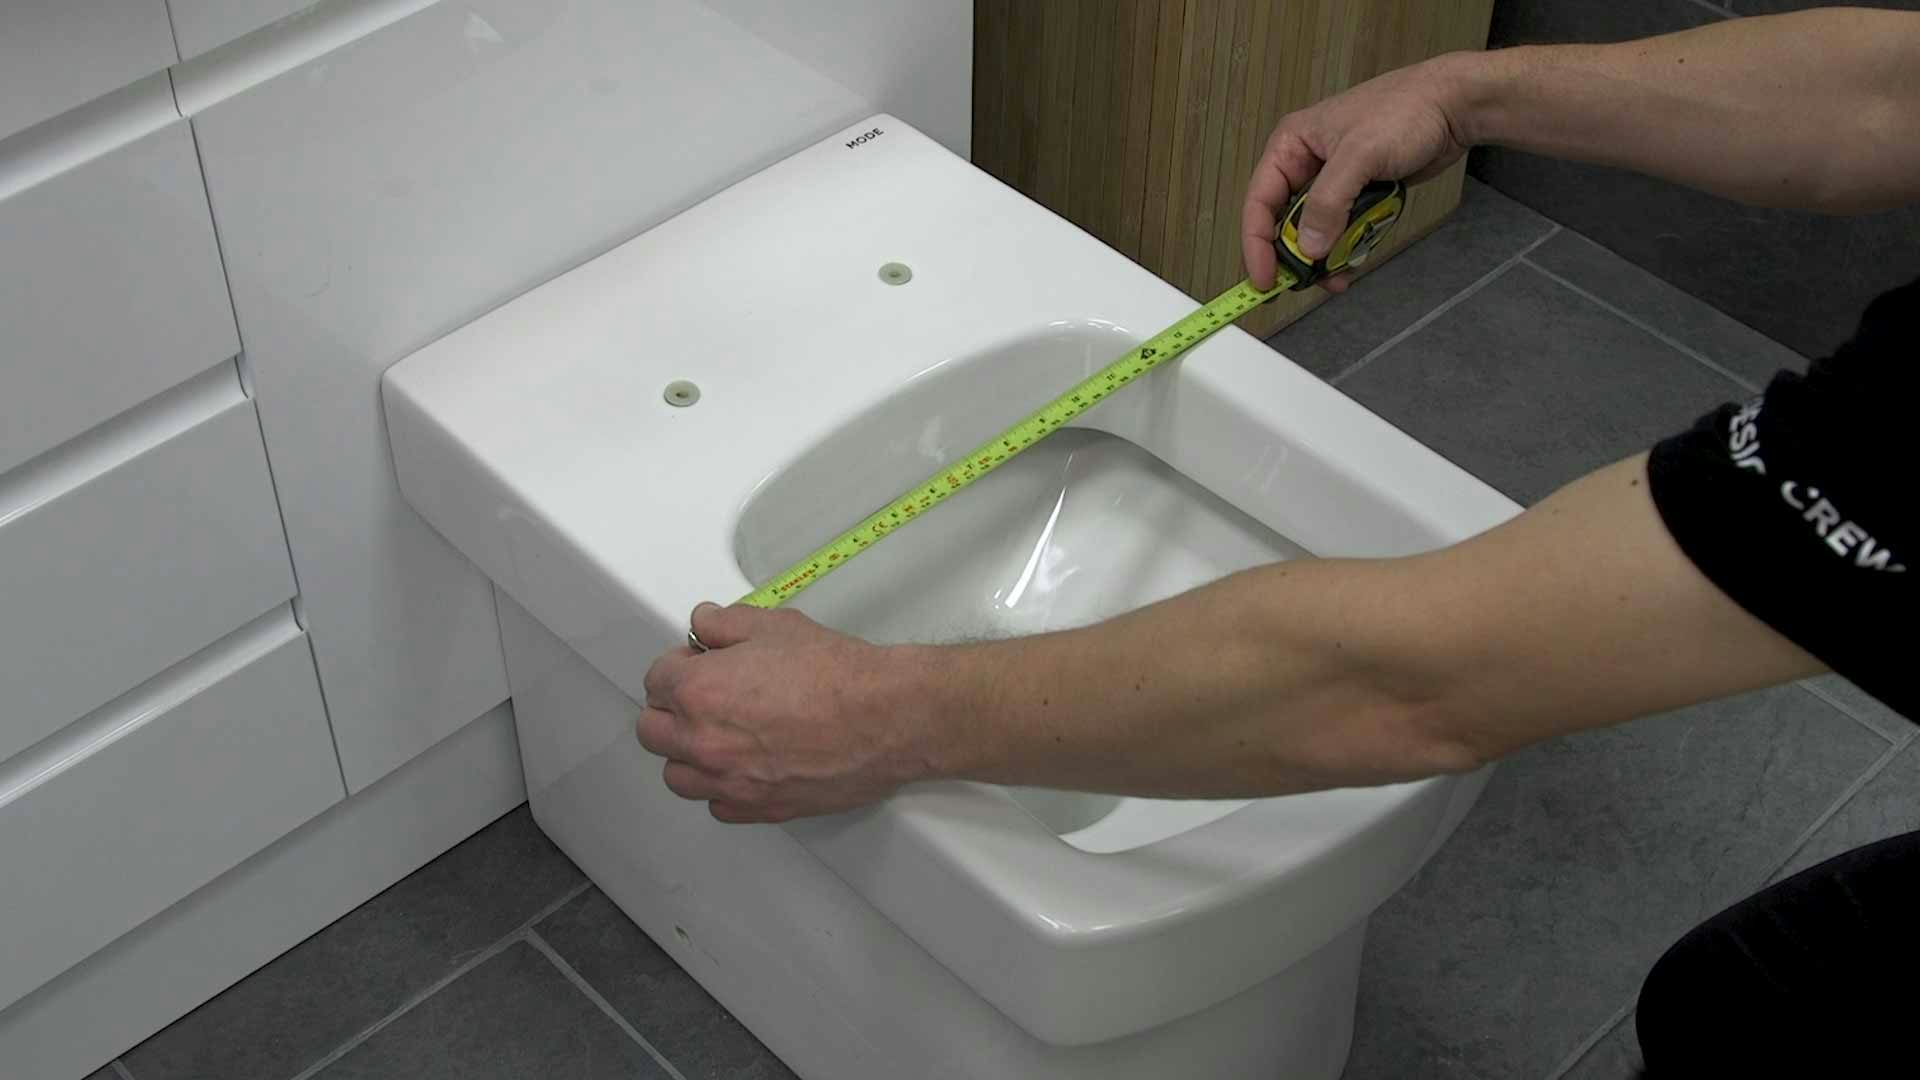 Measuring width of toilet